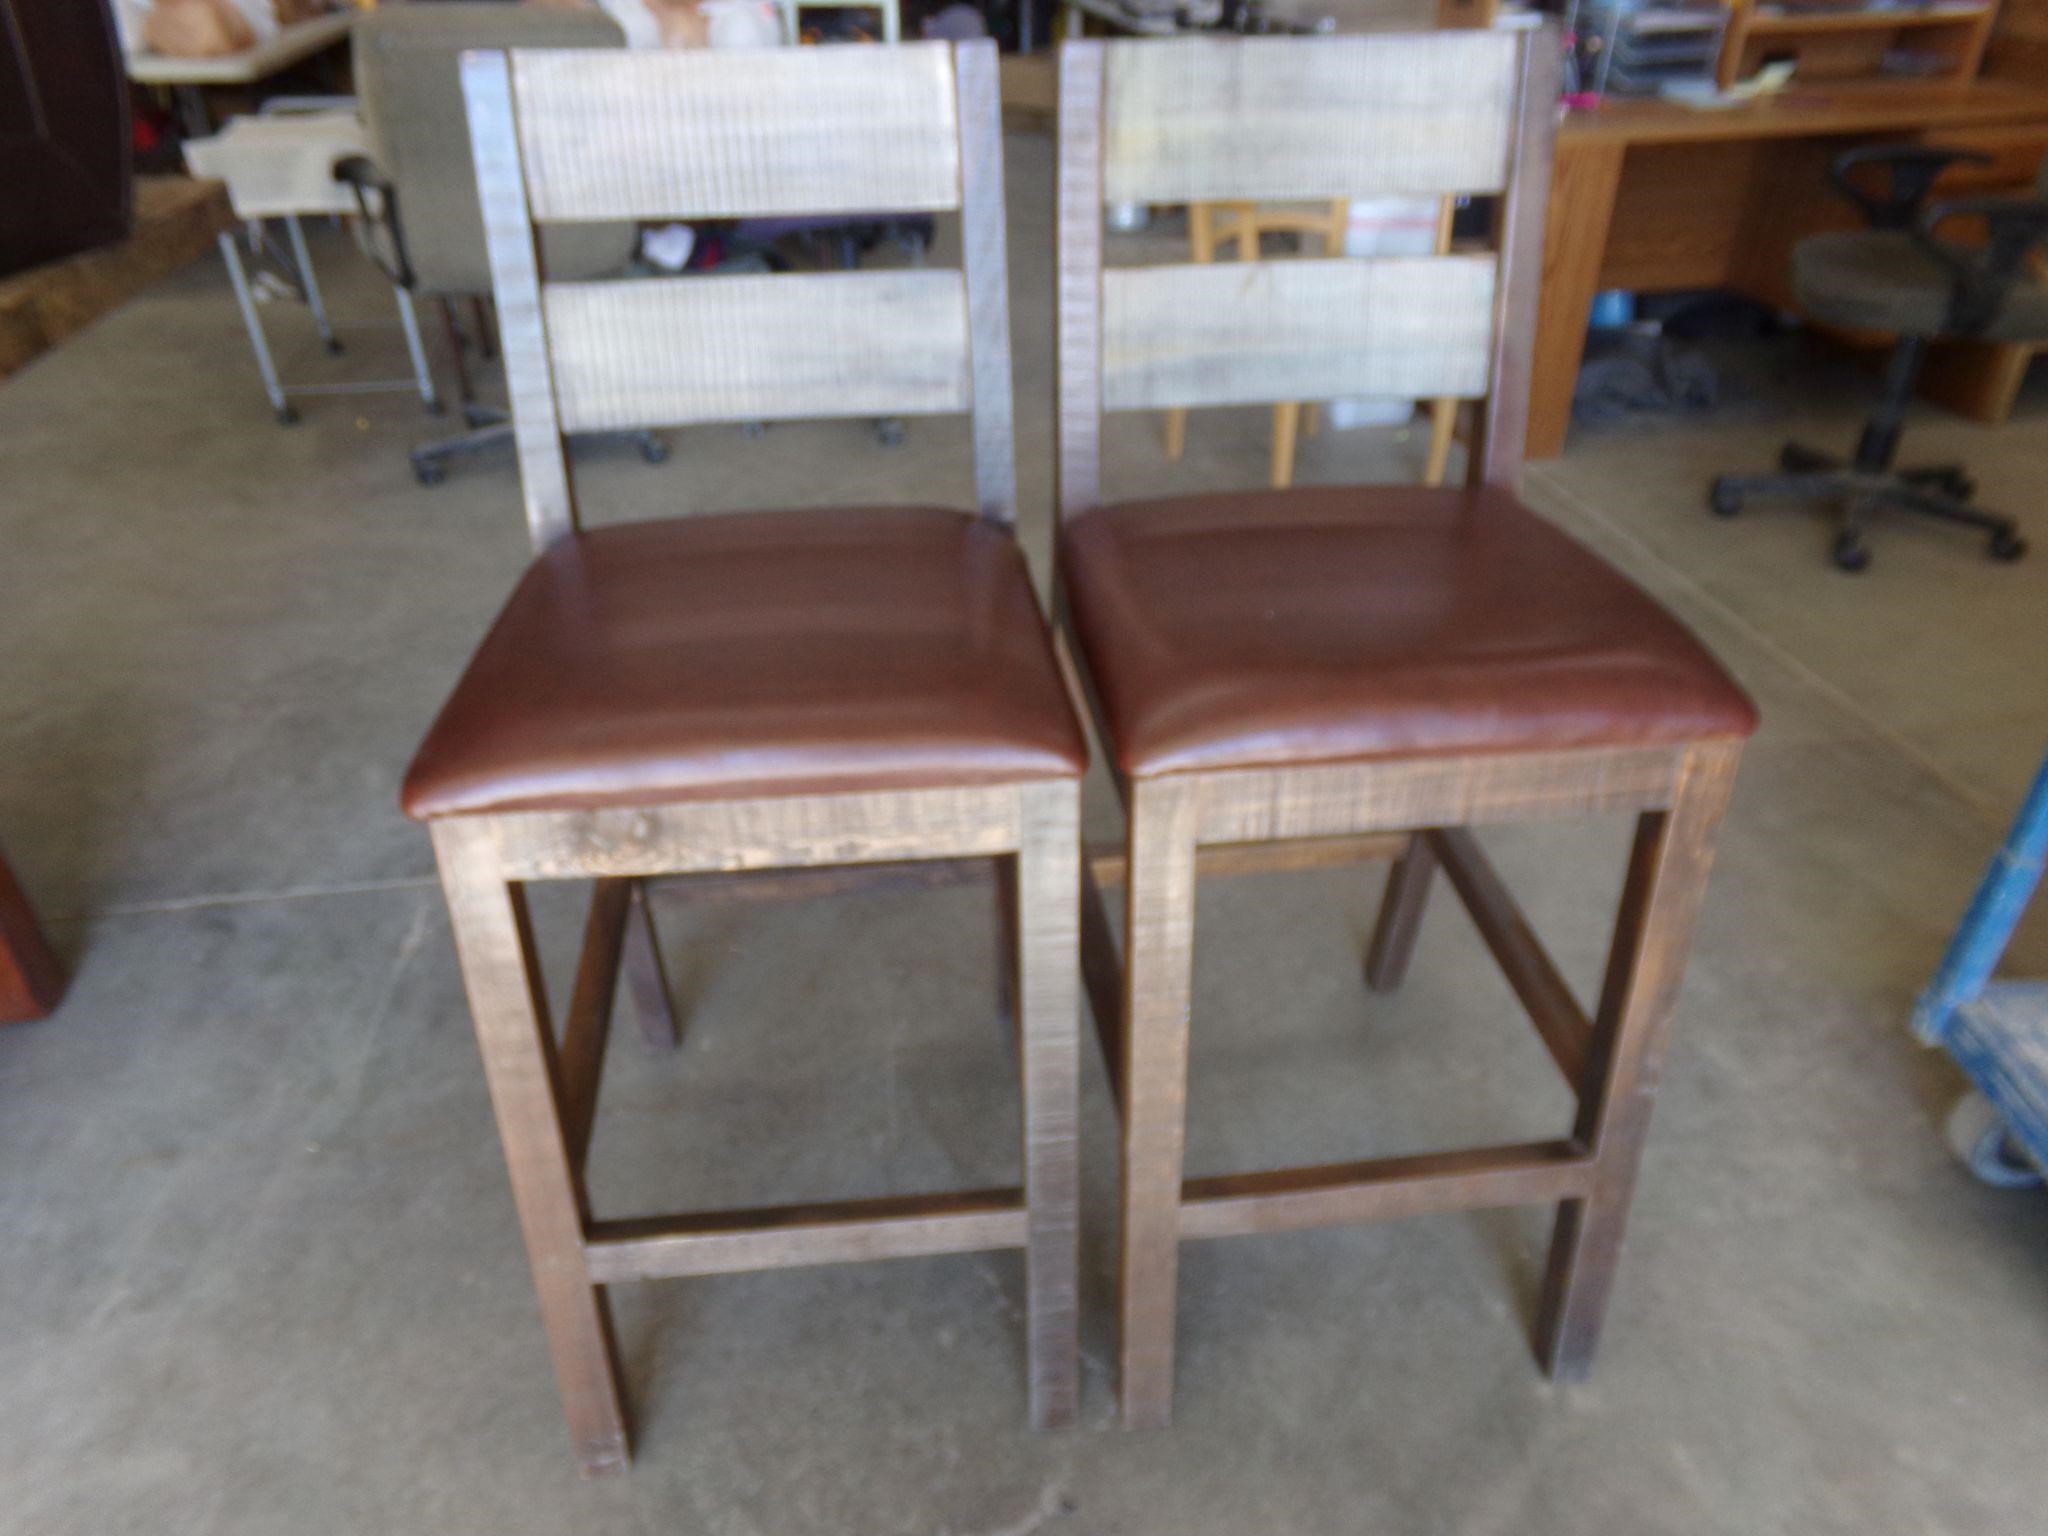 2 tall bar stools